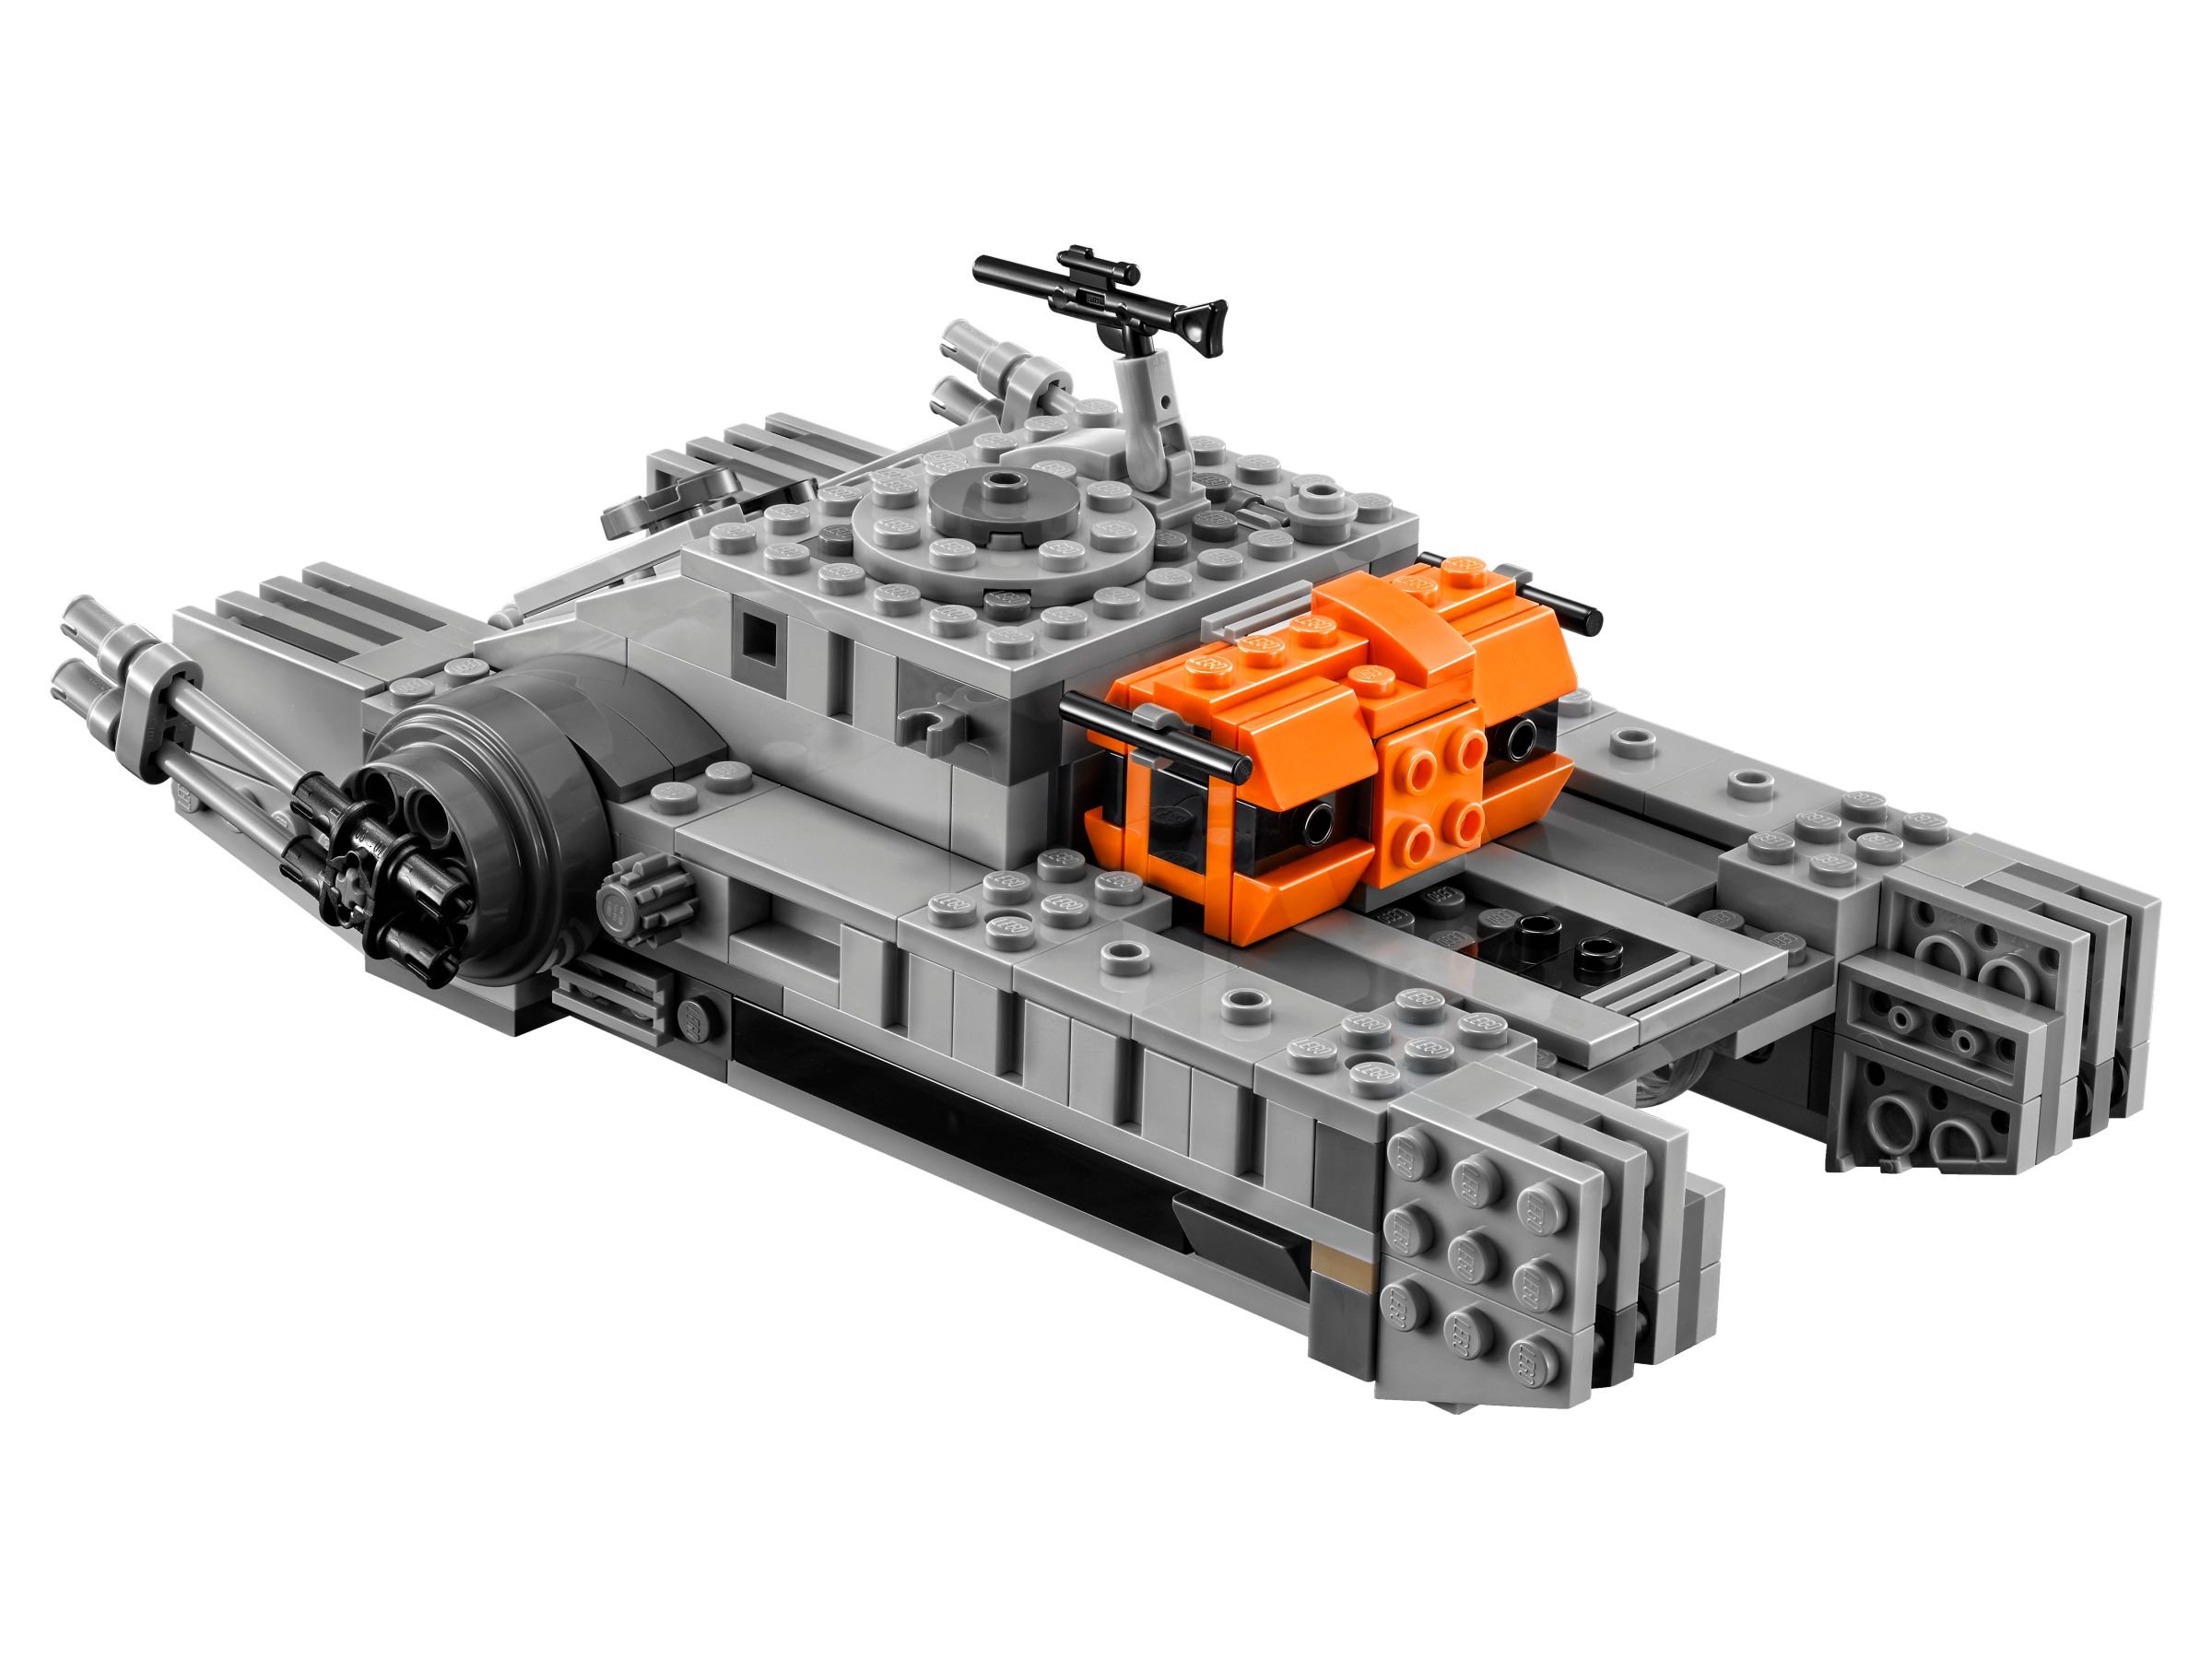 LEGO Star Wars 75152 Imperial Assault Hovertank™ LEGO_75152_alt3.jpg